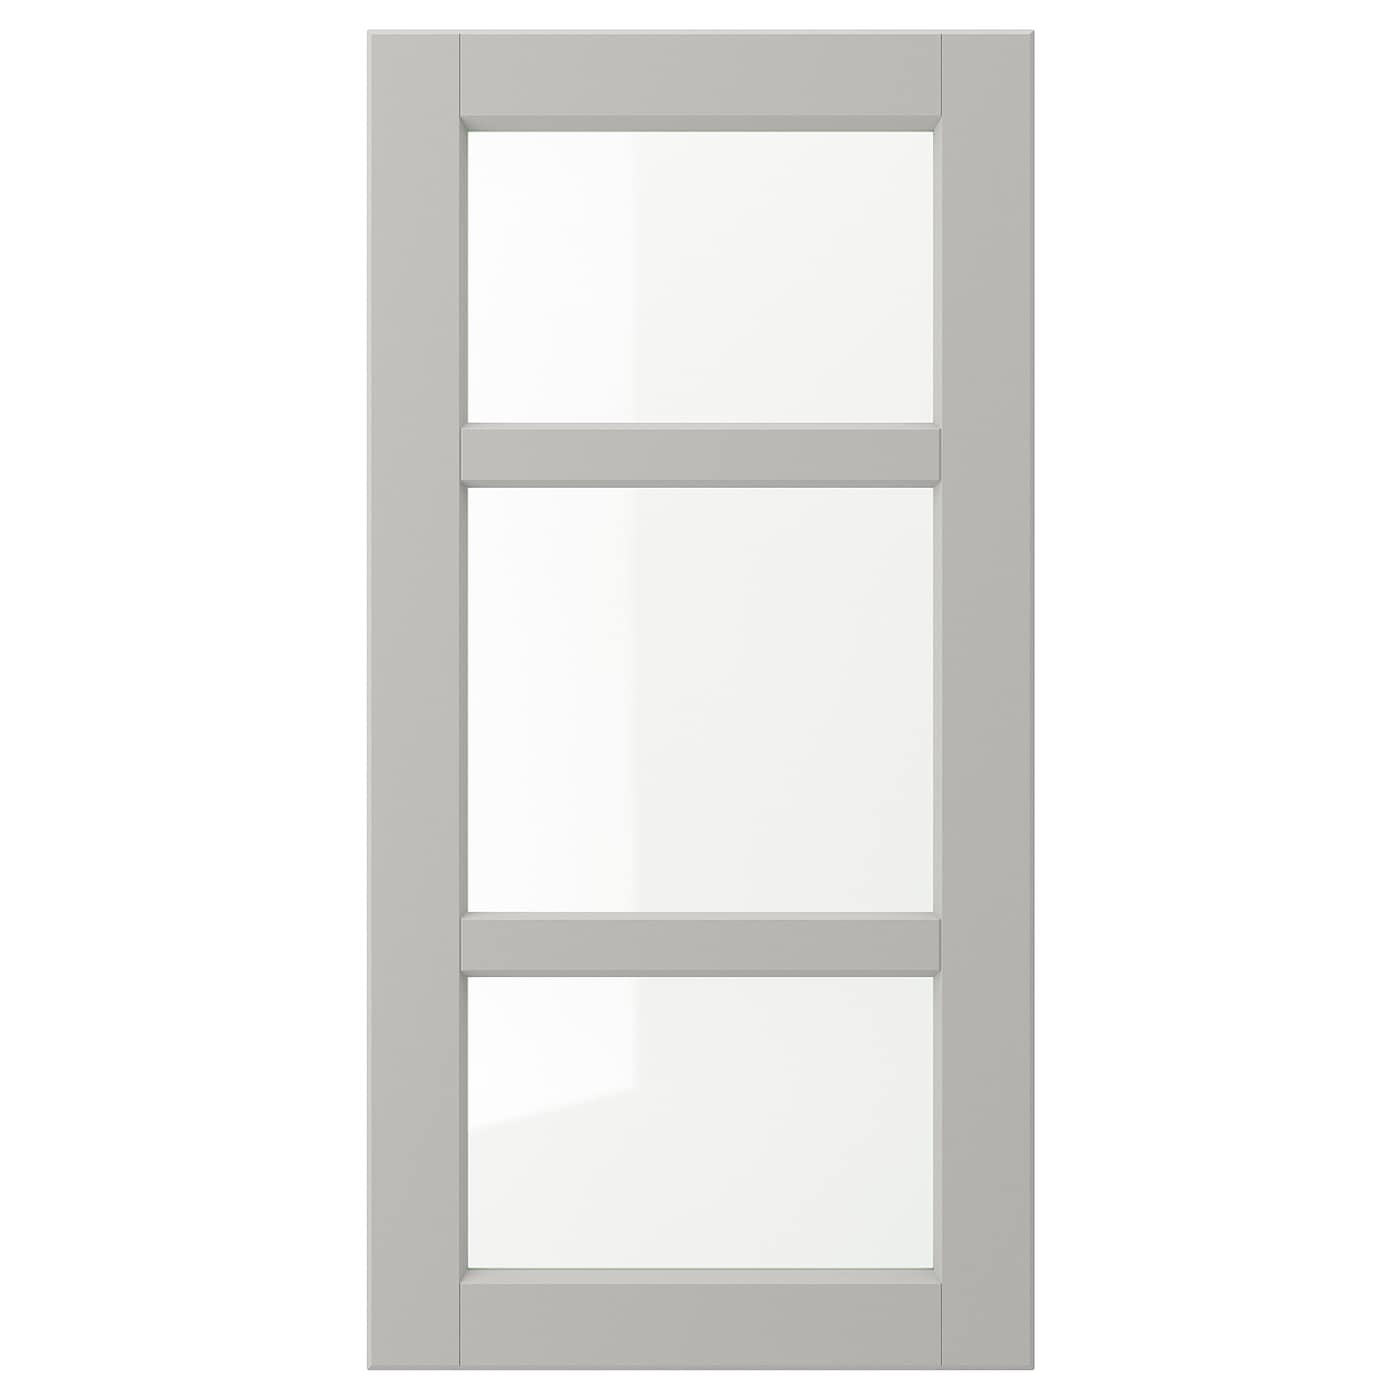 Дверца со стеклом - IKEA LERHYTTAN, 80х40 см, светло-серый, ЛЕРХЮТТАН ИКЕА